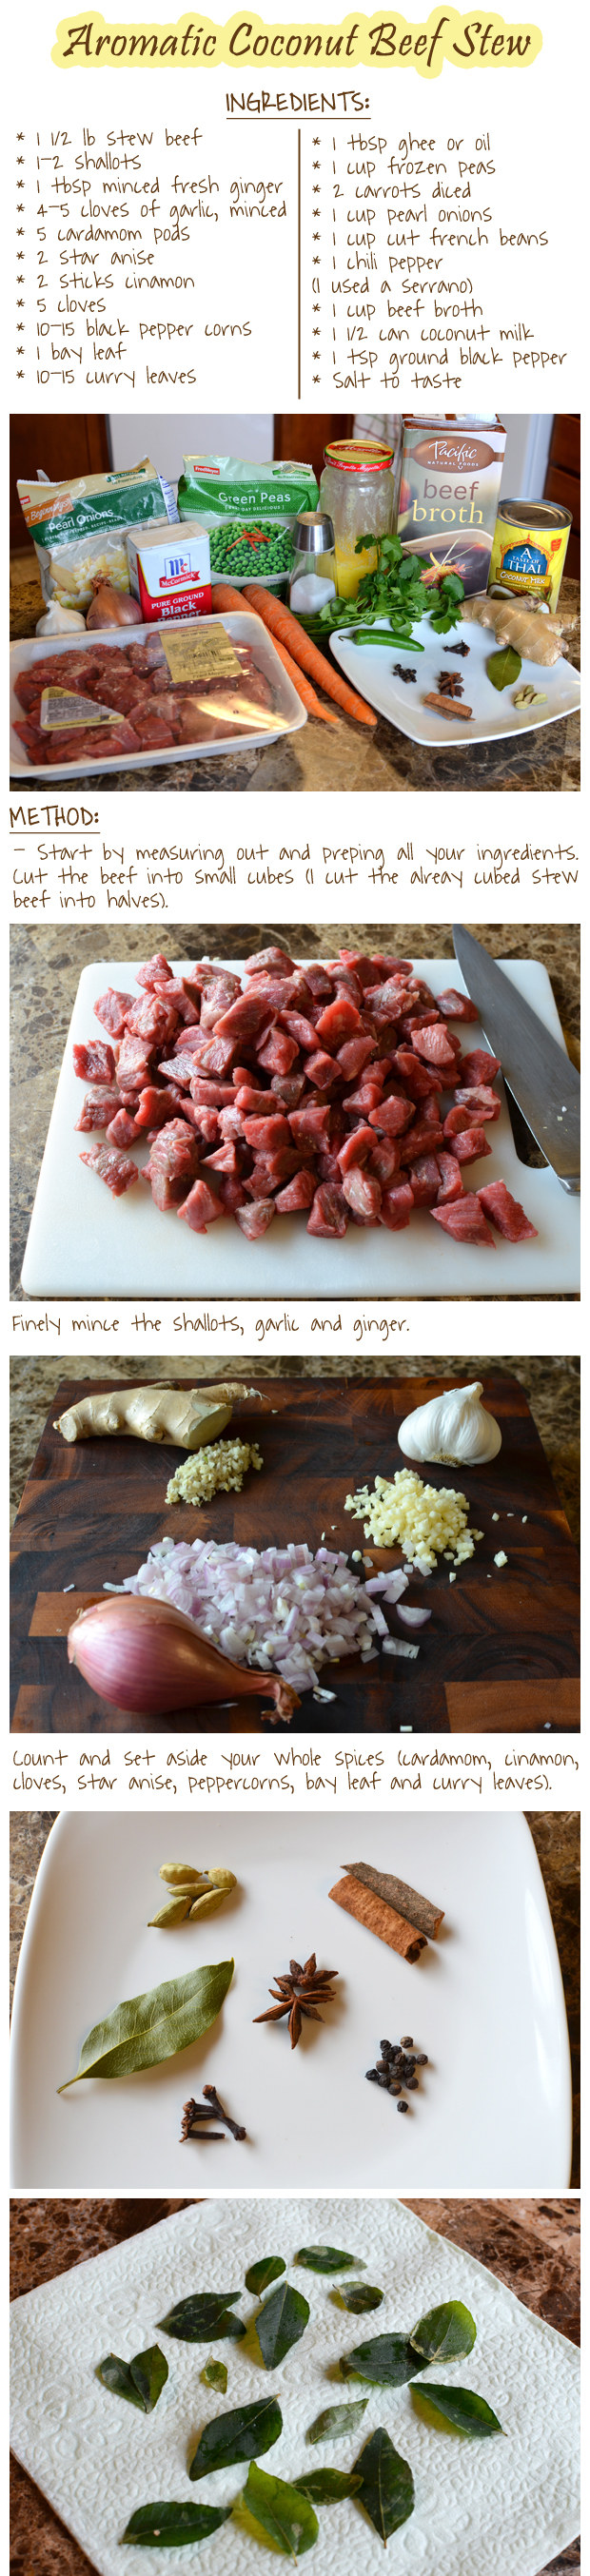 Aromatic Coconut Beef Stew Recipe (Part-1)